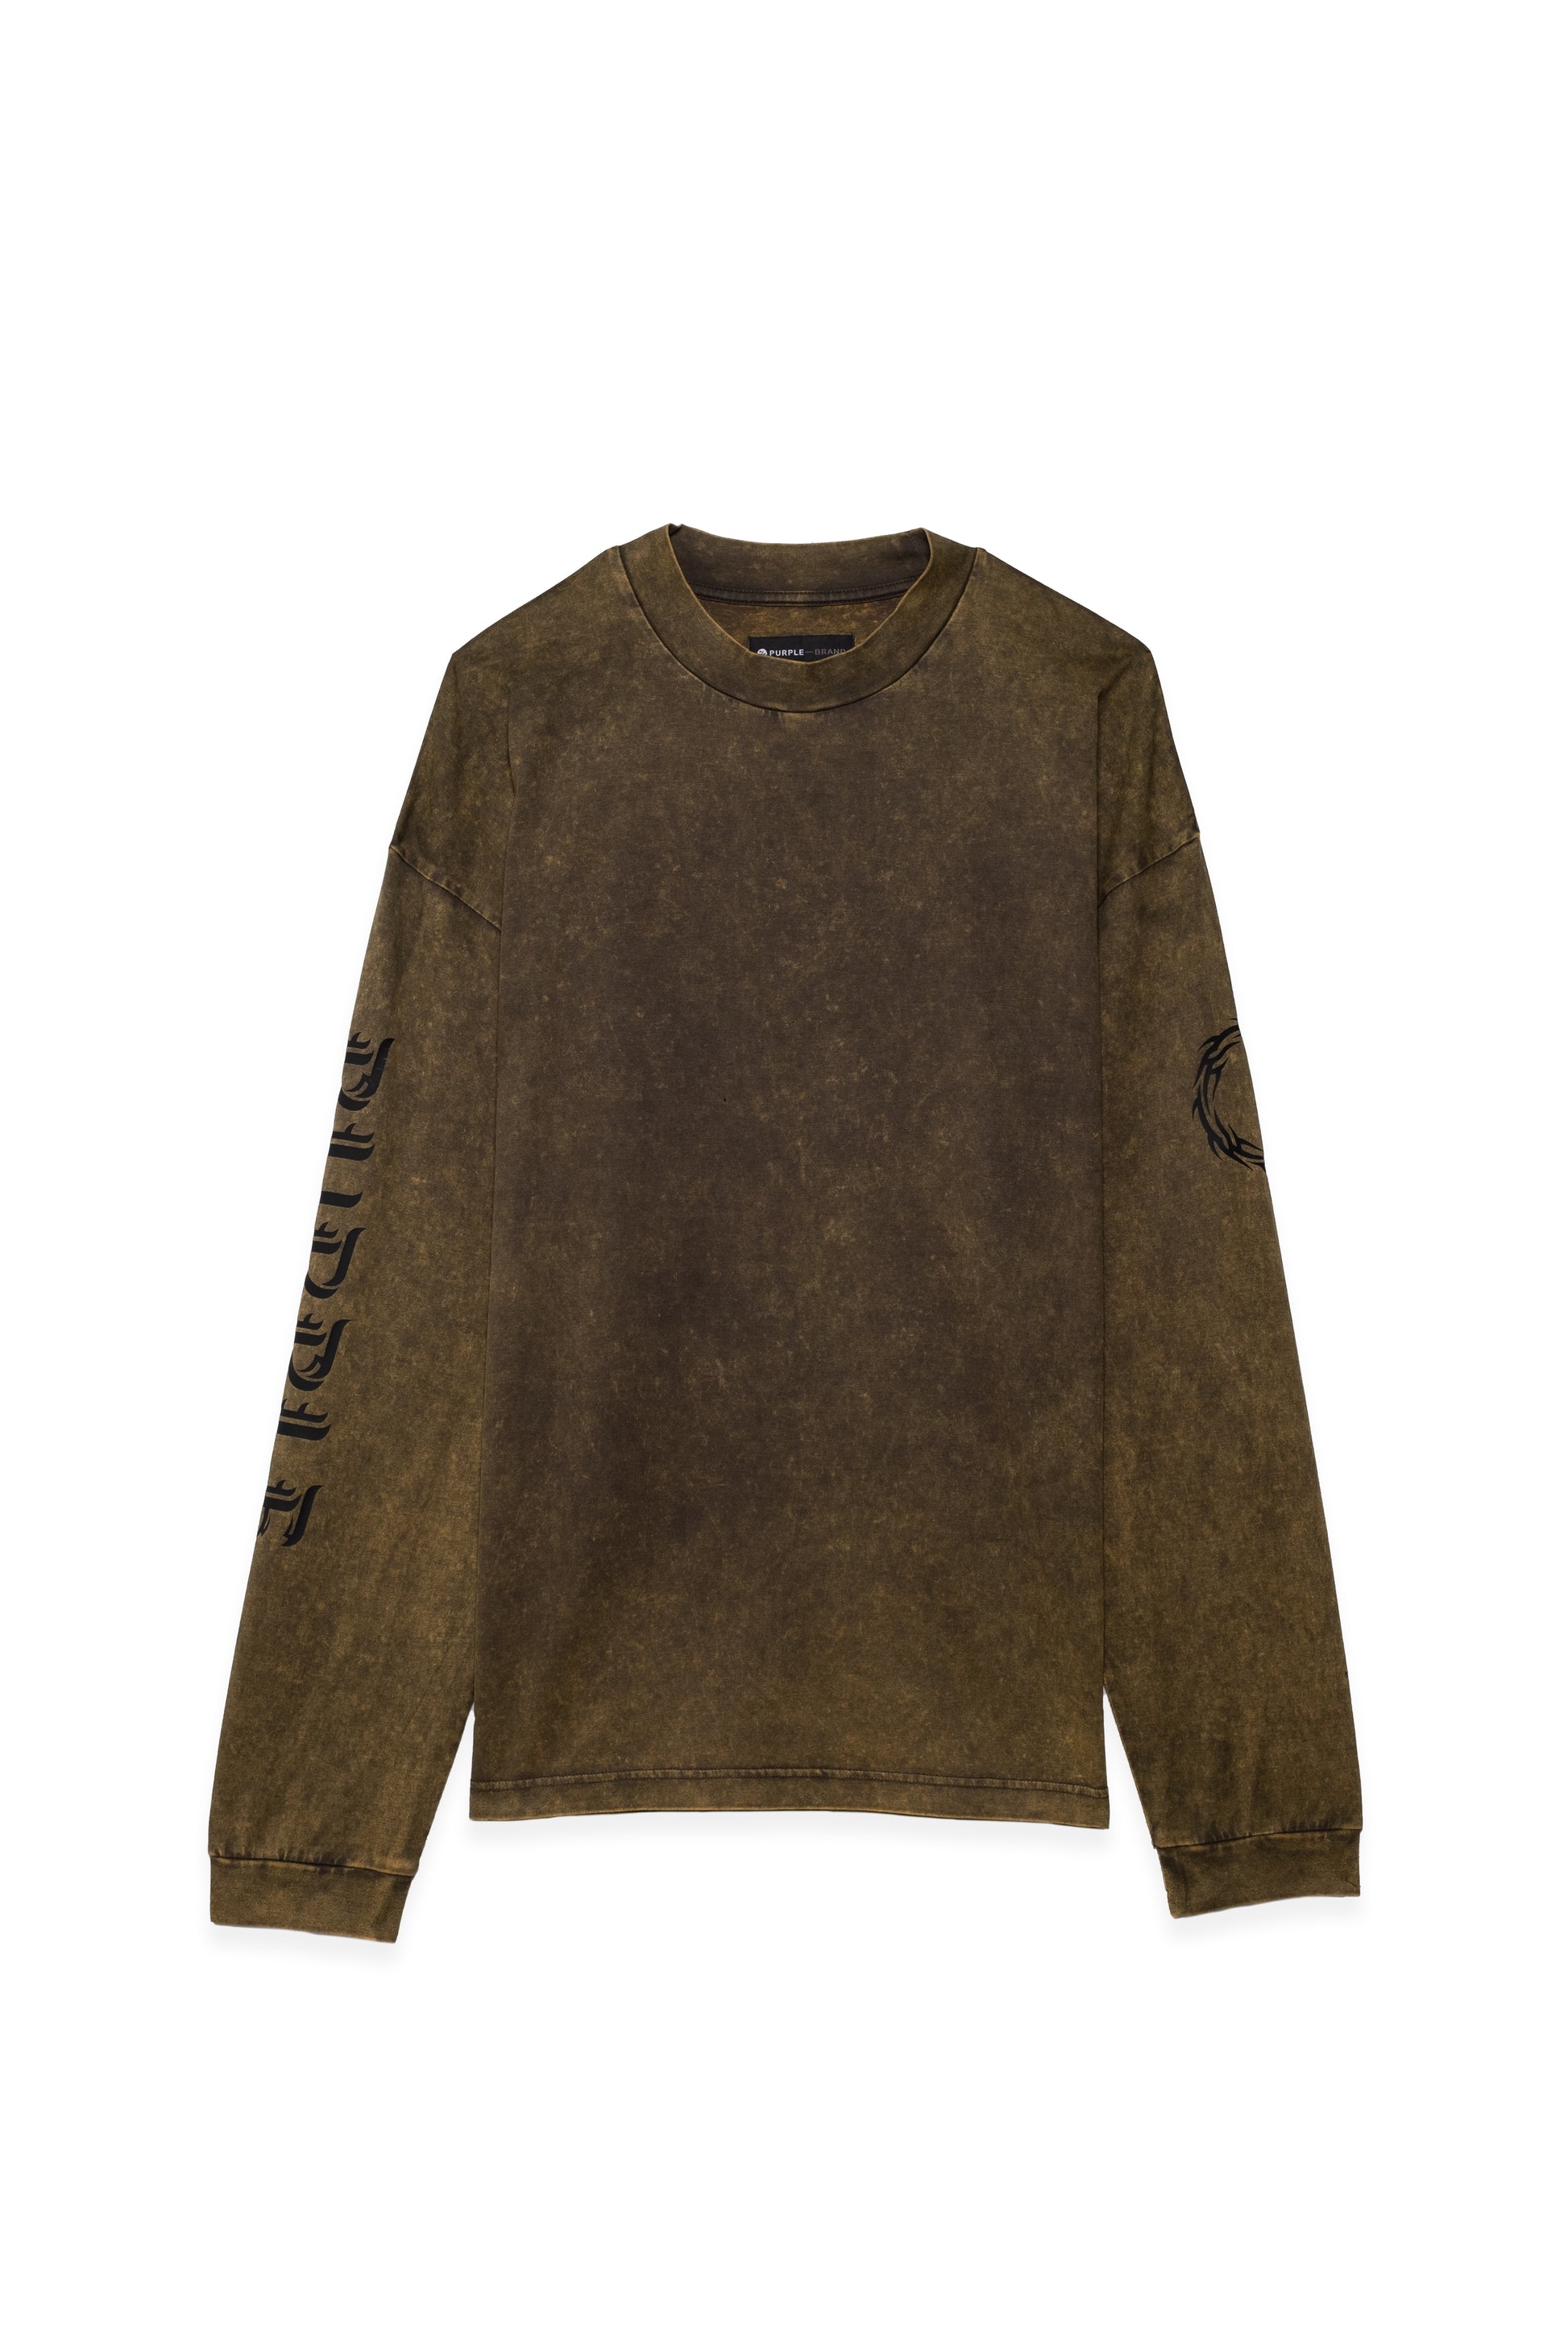 PURPLE BRAND - Men's Long Sleeve Shirt Shirt - Style No. P201 - Olive Acid Wash - Front